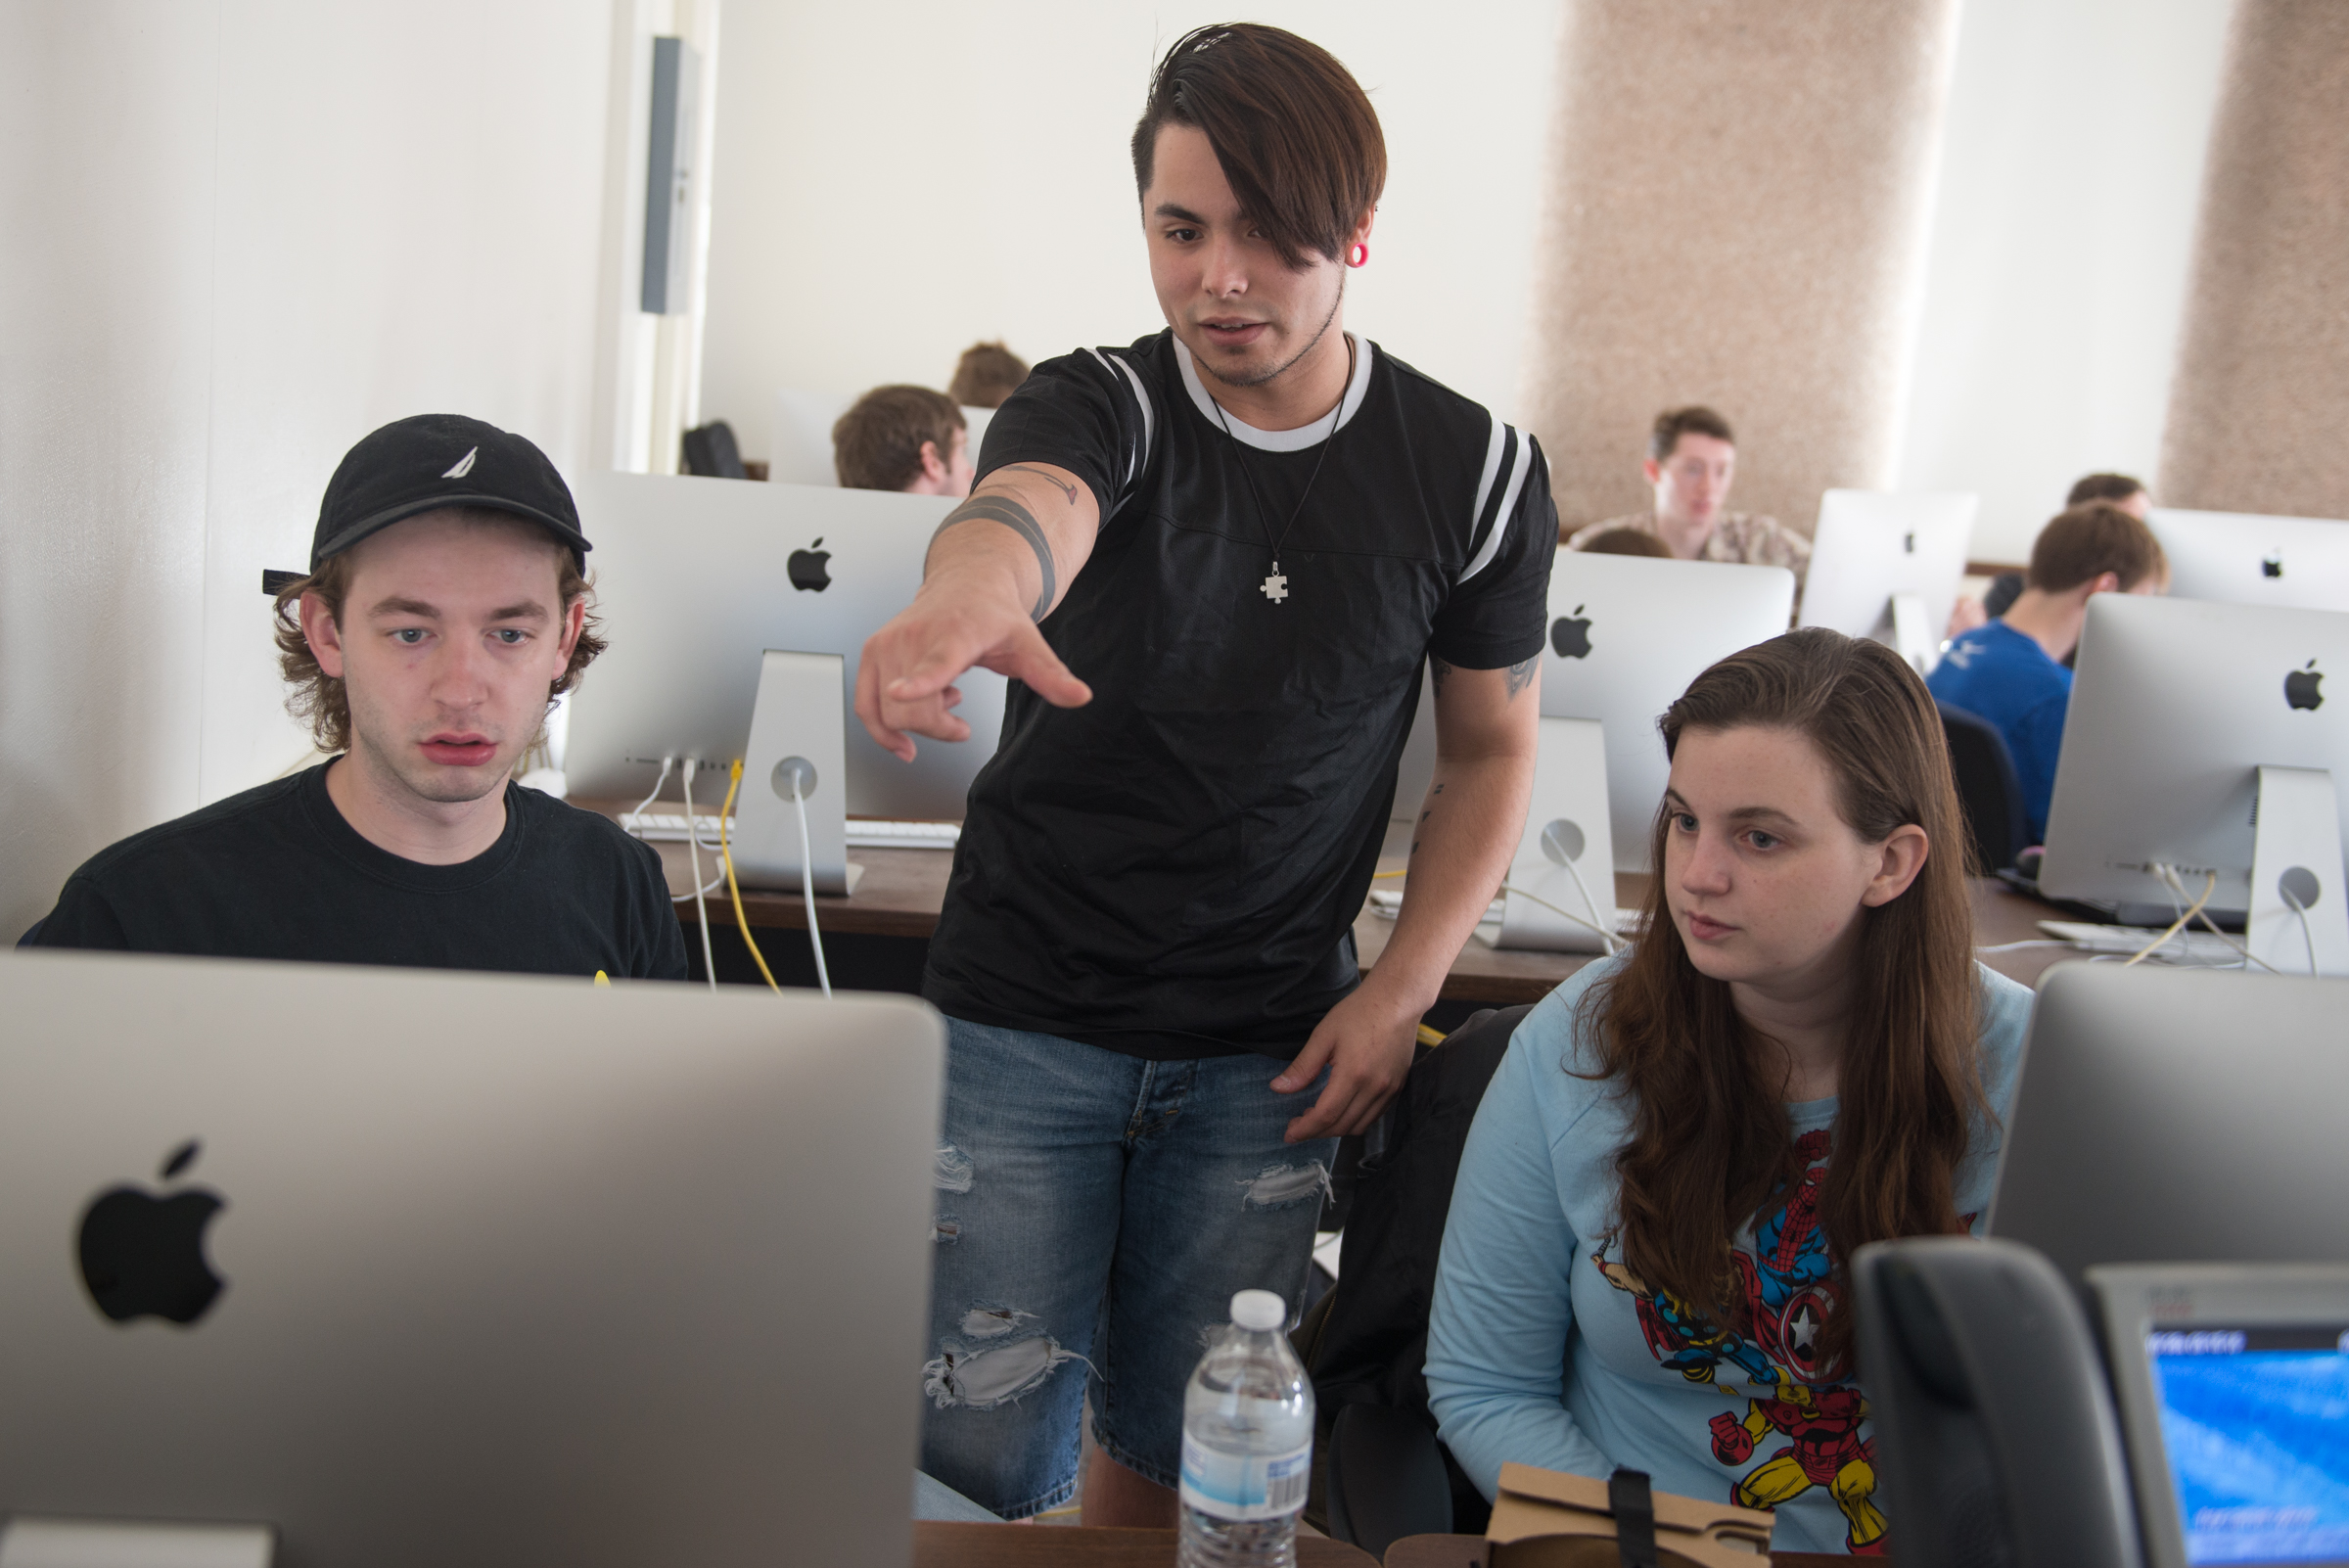 3 students look at a computer